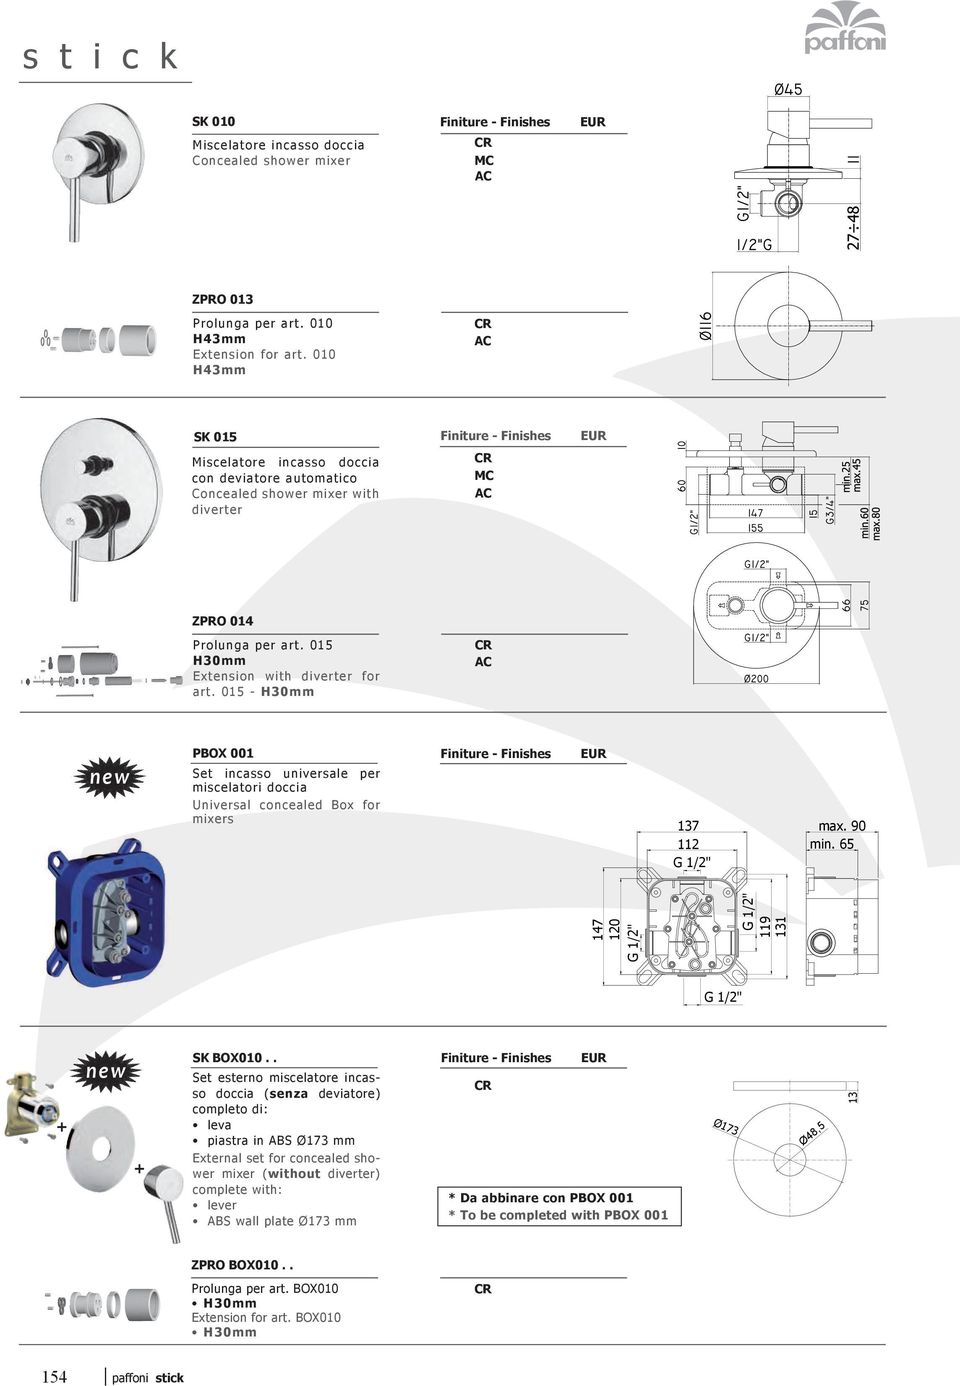 015 - H30mm new PBOX 001 Set incasso universale per miscelatori doccia Universal concealed Box for mixers + new + SK BOX010.